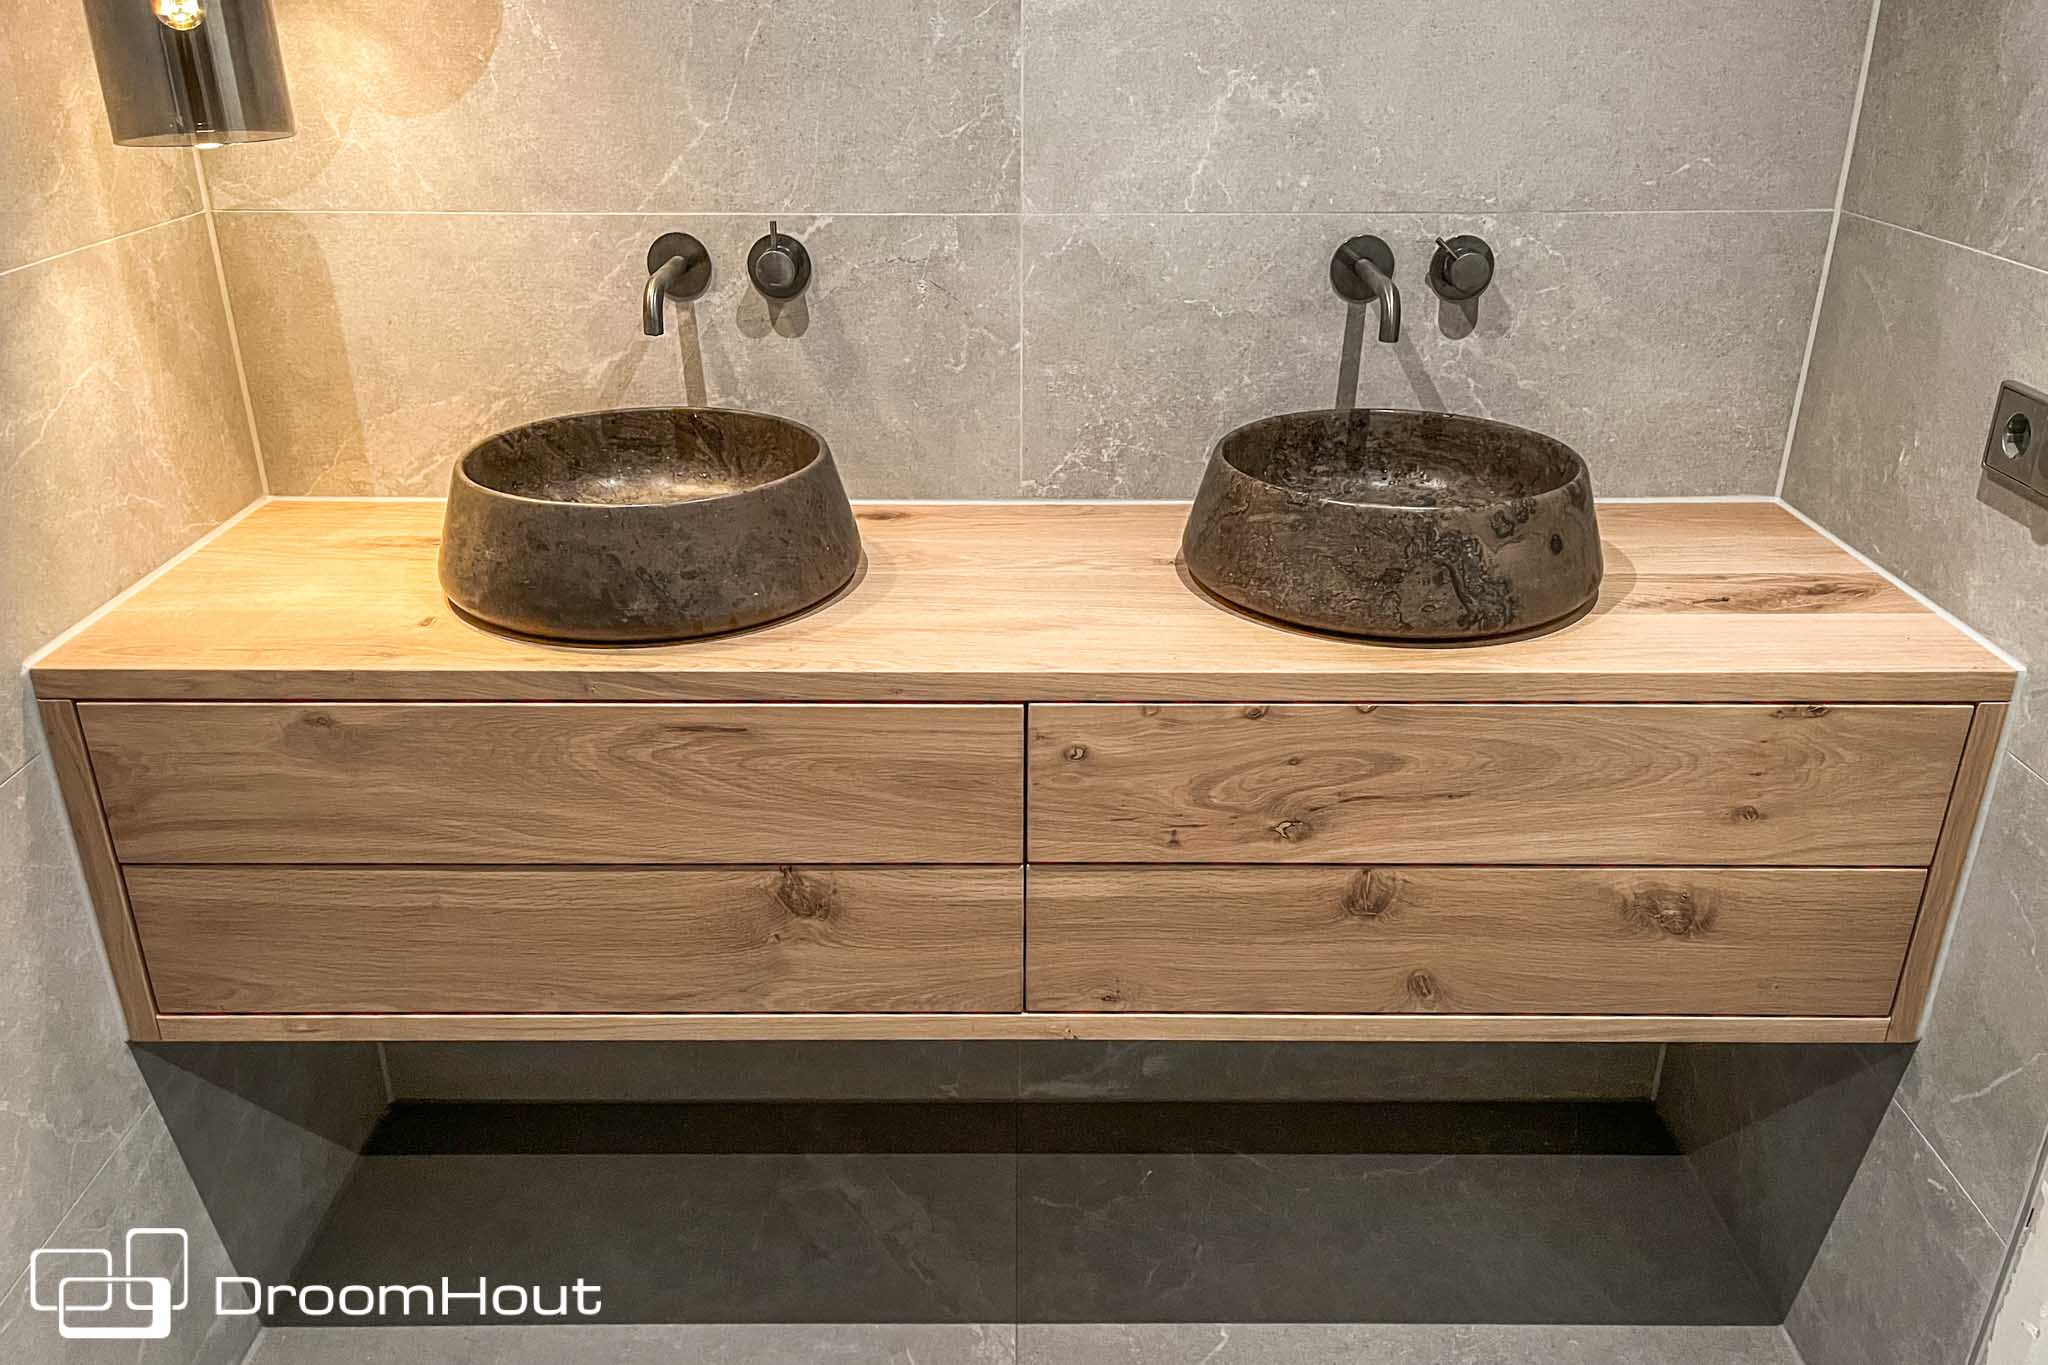 Badkamermeubel op maat - houten badkamermeubels op maat by DroomHout